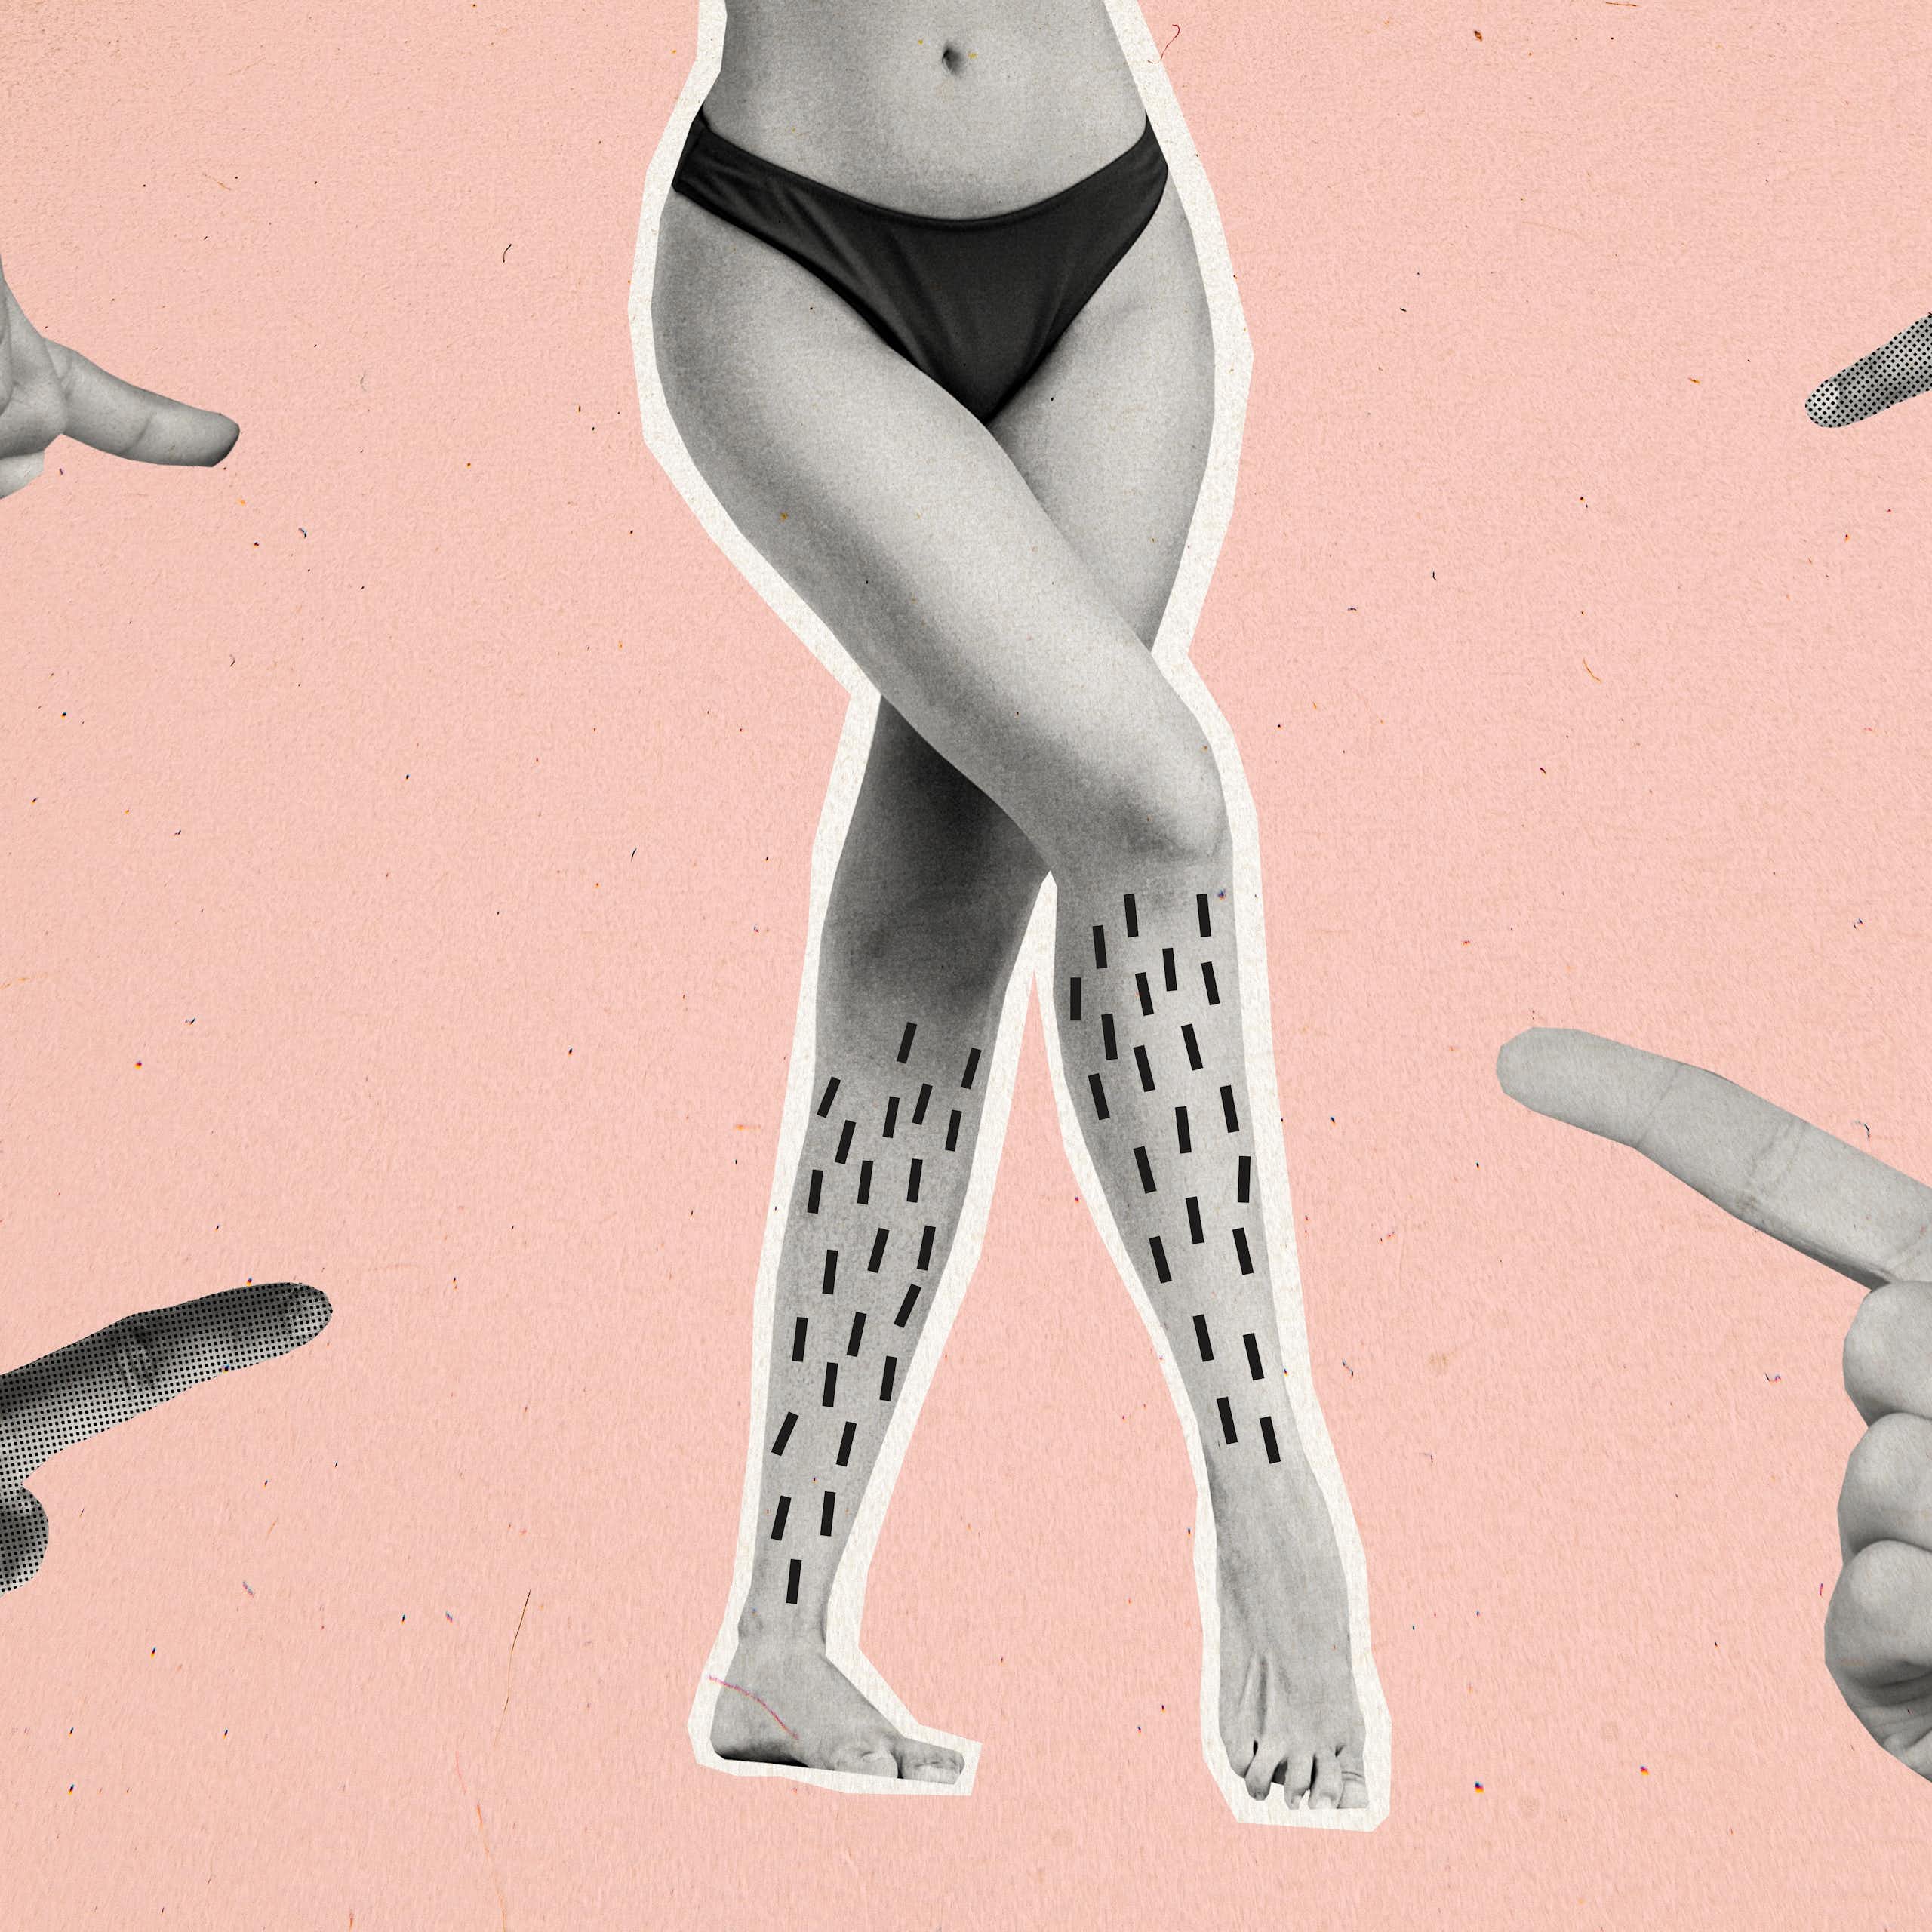 Mulus tanpa bulu: ekspektasi tak masuk akal pada tubuh perempuan